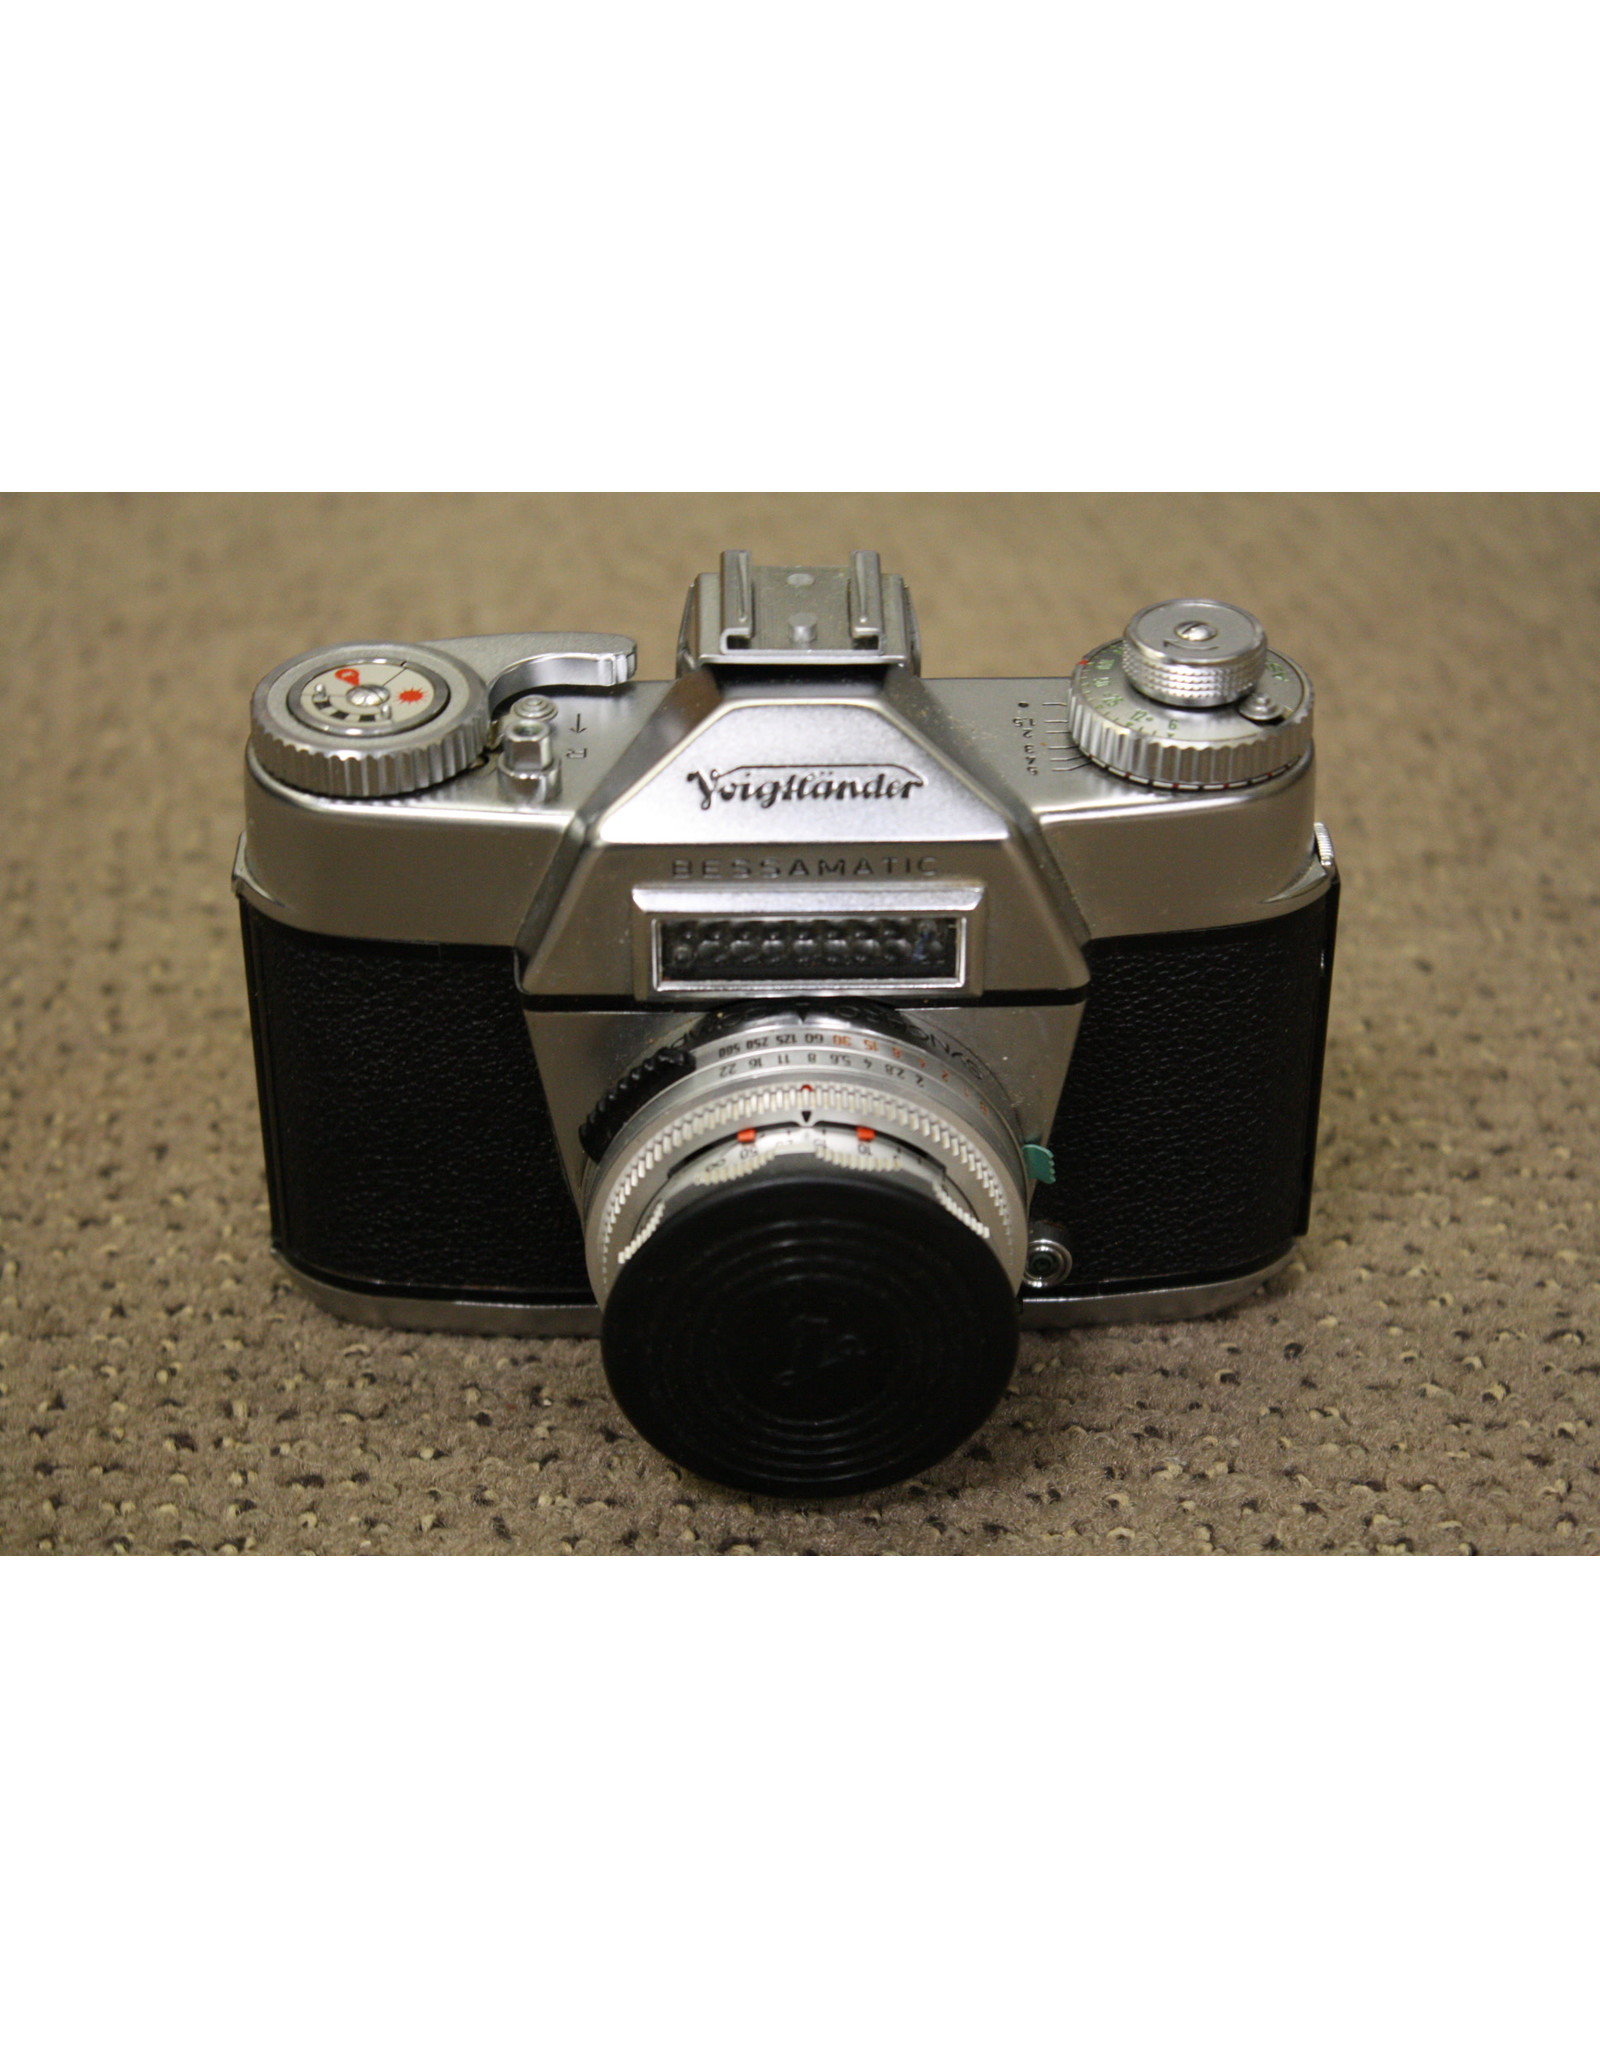 Canon Voigtlander Bessamatic Film Camera Color Skopar 50mm 2.8 Lens Germany OUTFIT (SHUTTER NEEDS CLA